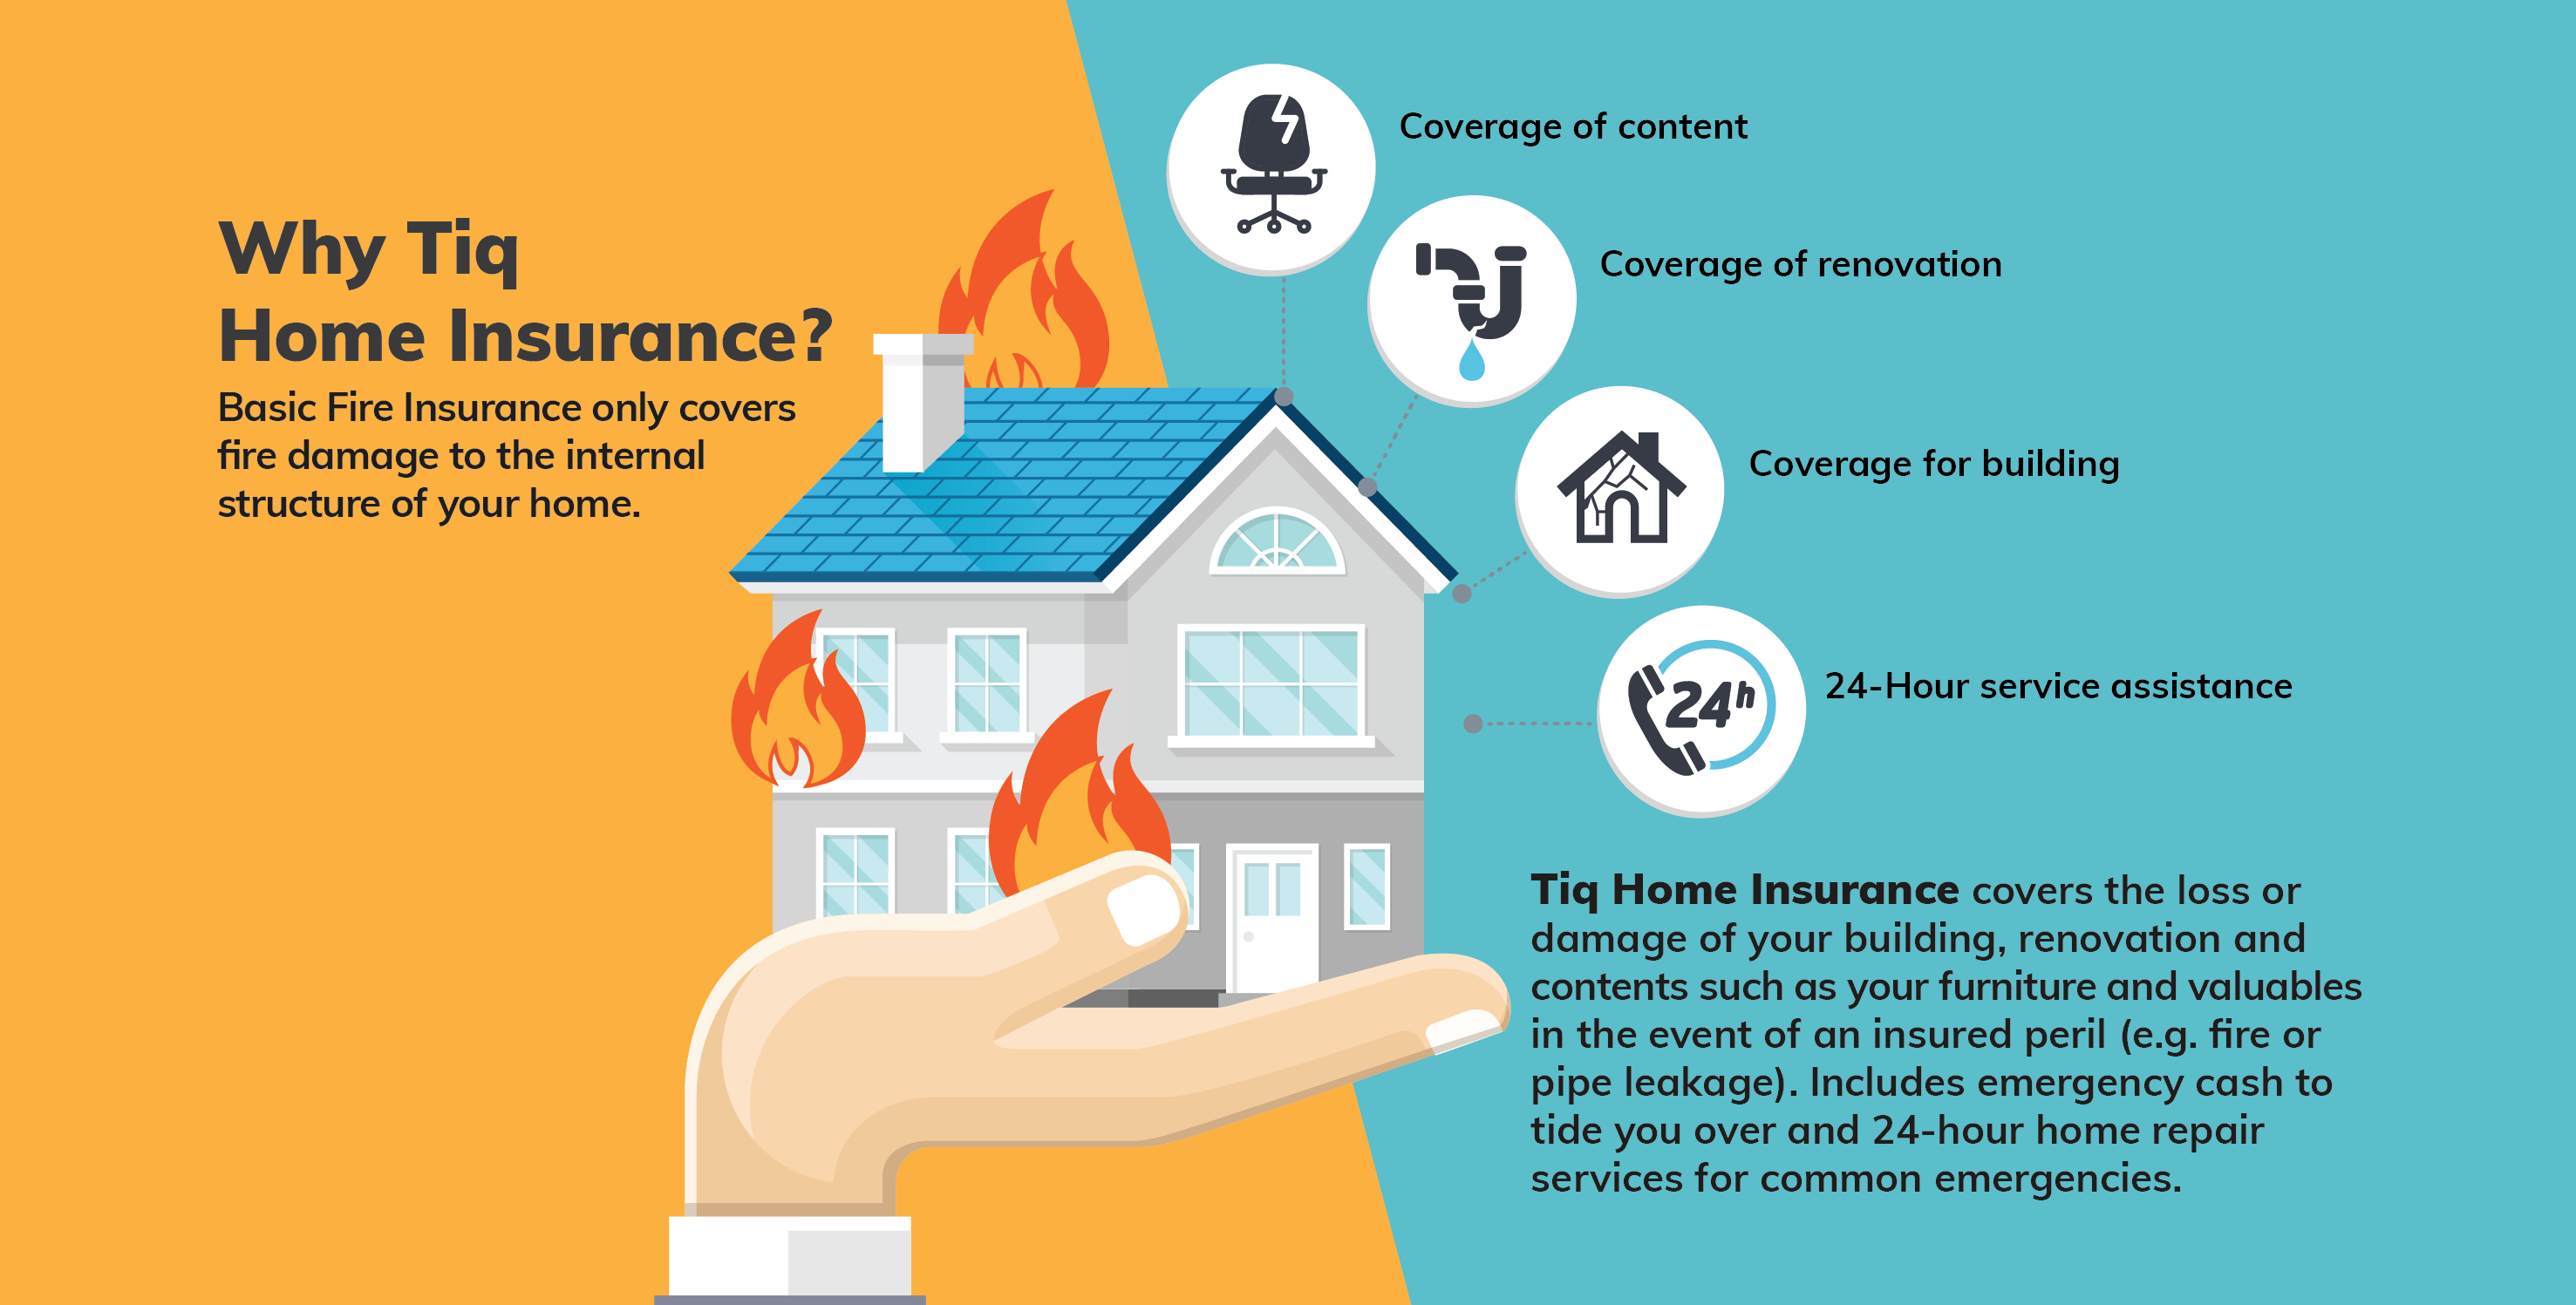 Tiq Home Insurance - Leading digital insurance company in Singapore ...